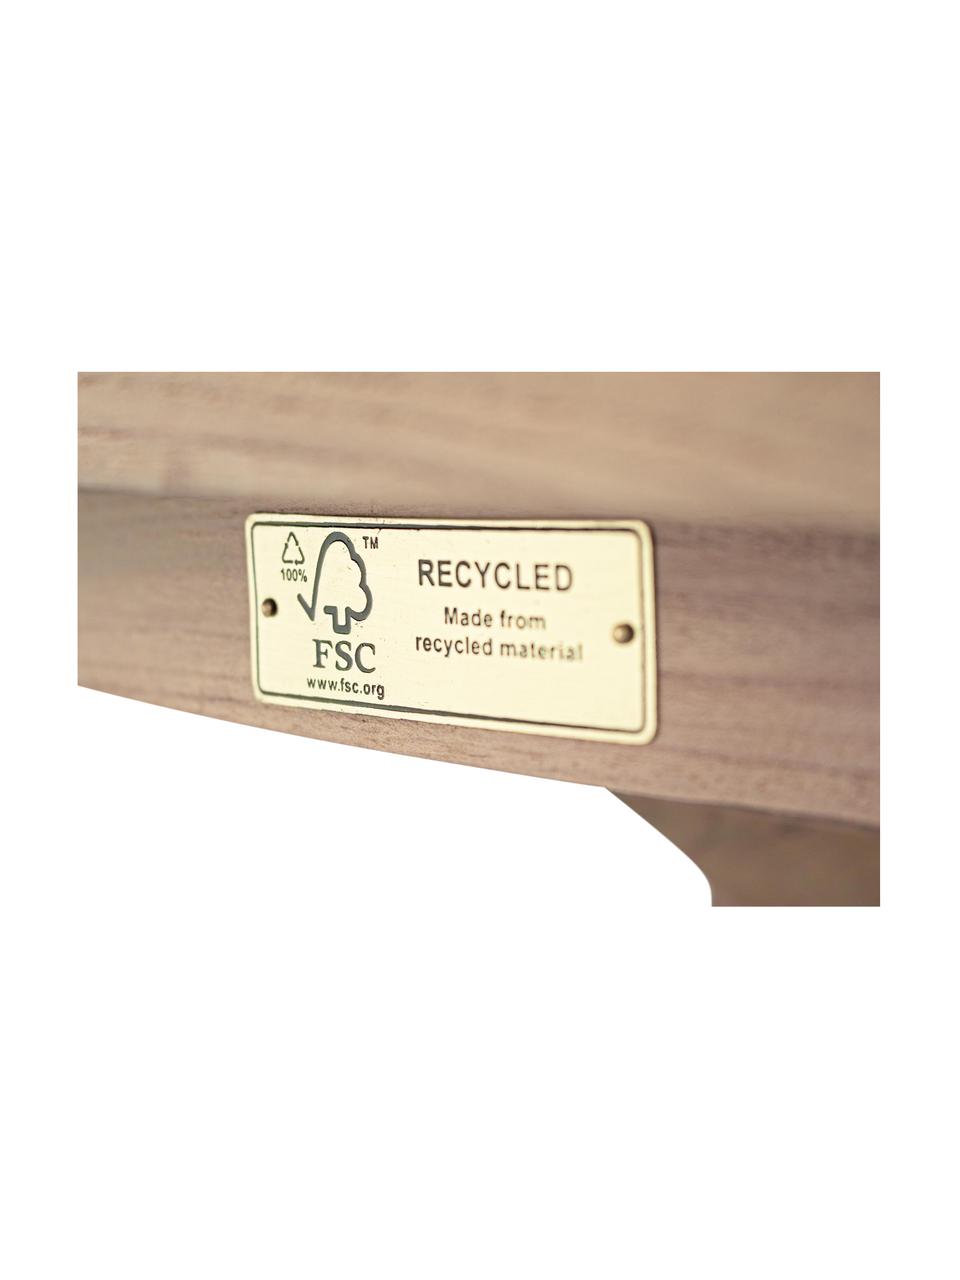 Mesa de comedor redonda Rift, tablero de madera de teca reciclada, Teca reciclada y certificado FSC, Teca reciclada, Ø 135 x Al 76 cm